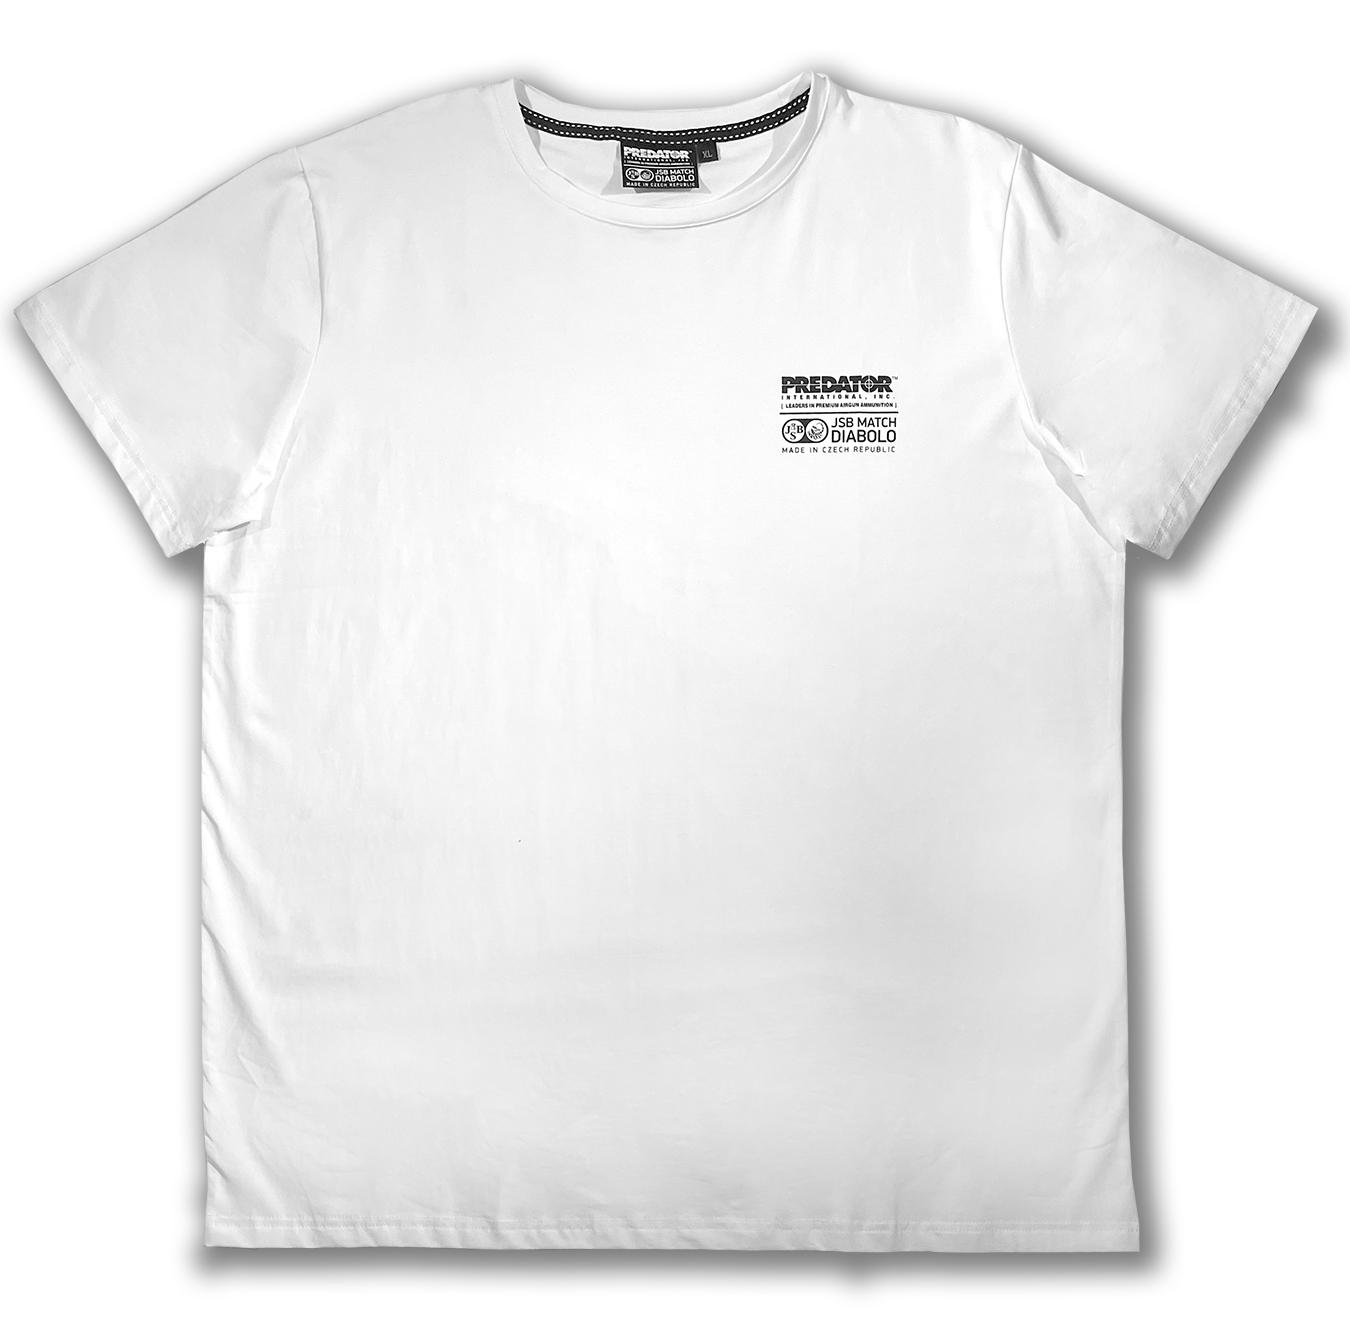 JSB Predator Short Sleeve Cotton/Spandex T-Shirt, White, Medium